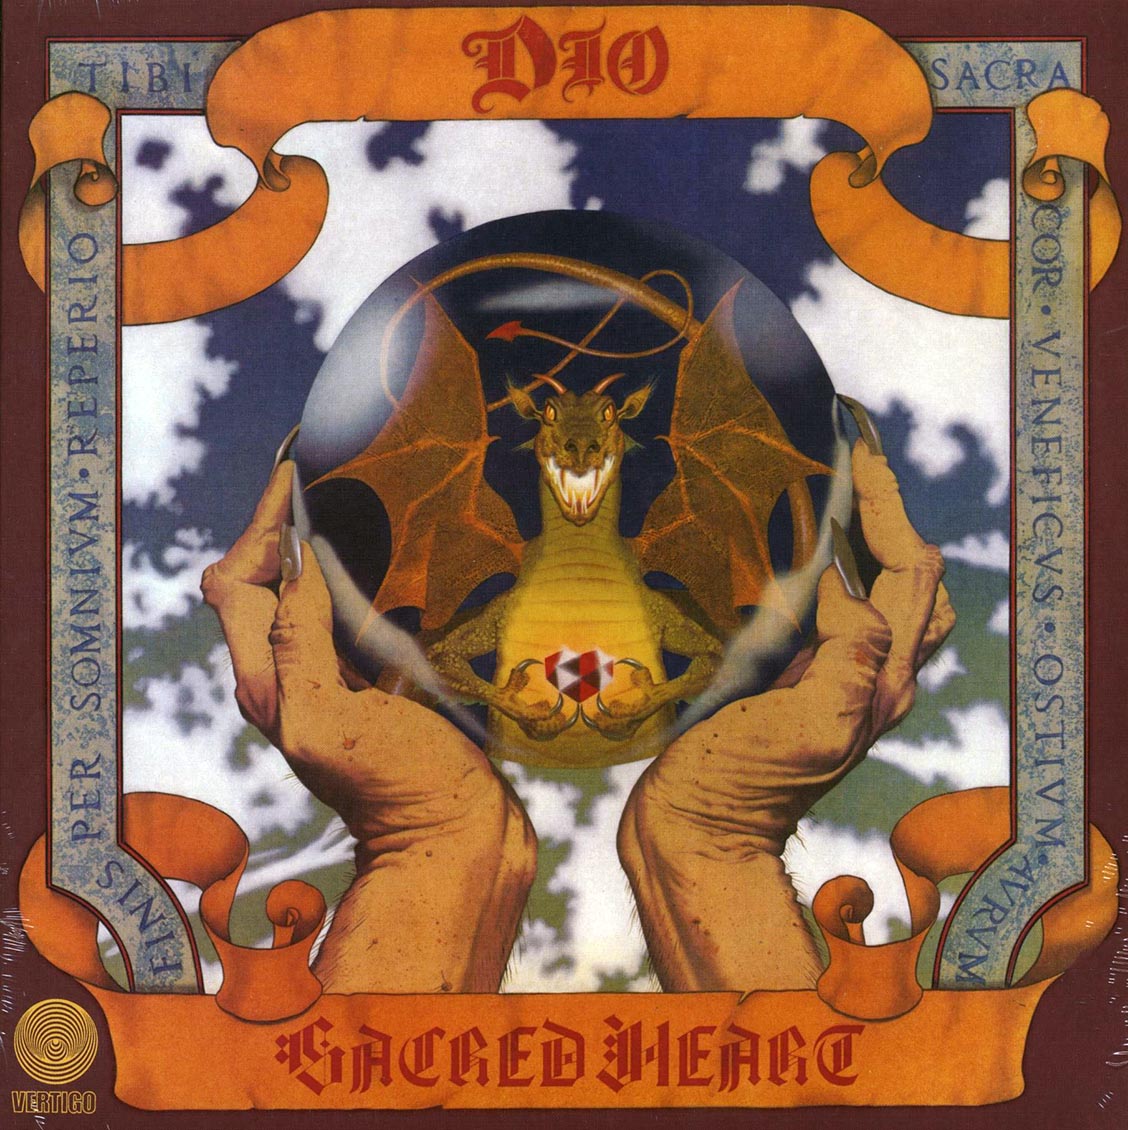 Dio - Sacred Heart (180g) (remastered) - Vinyl LP